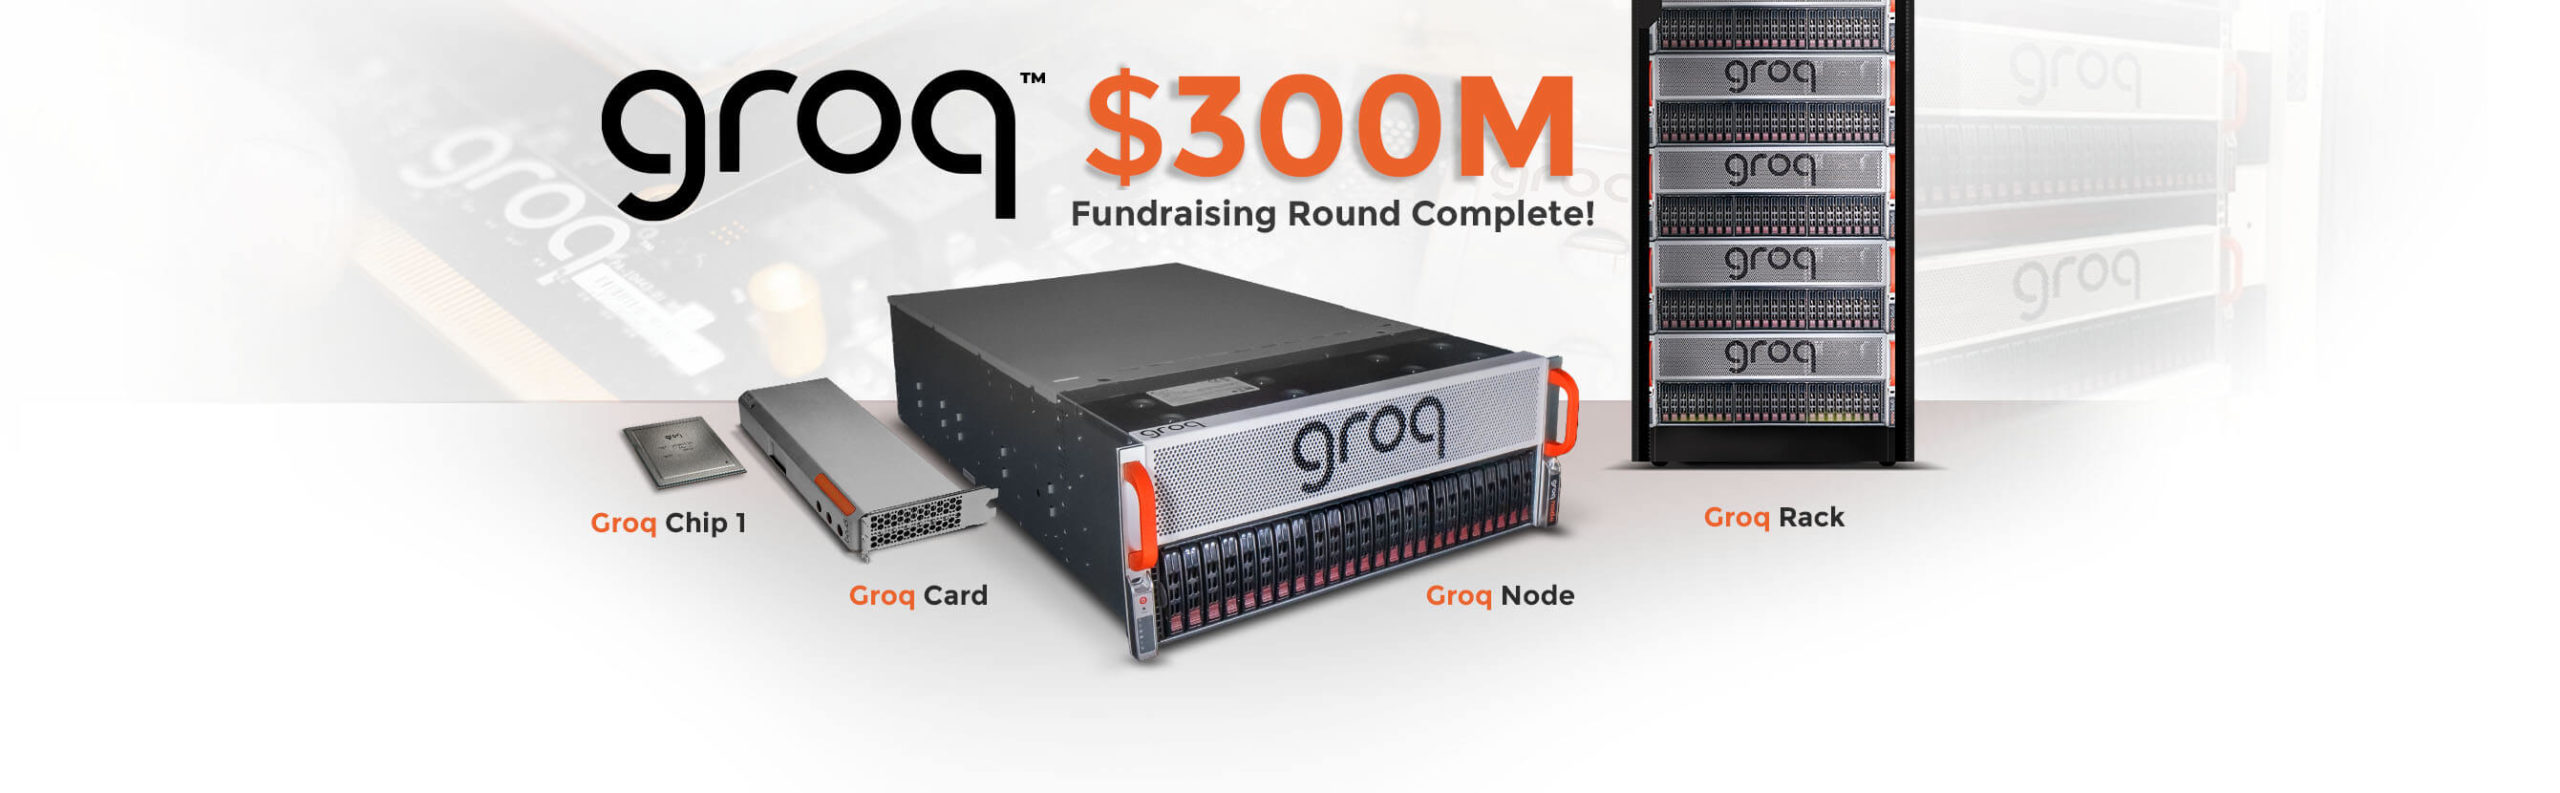 Groq Closes $300 Million Fundraise - Groq